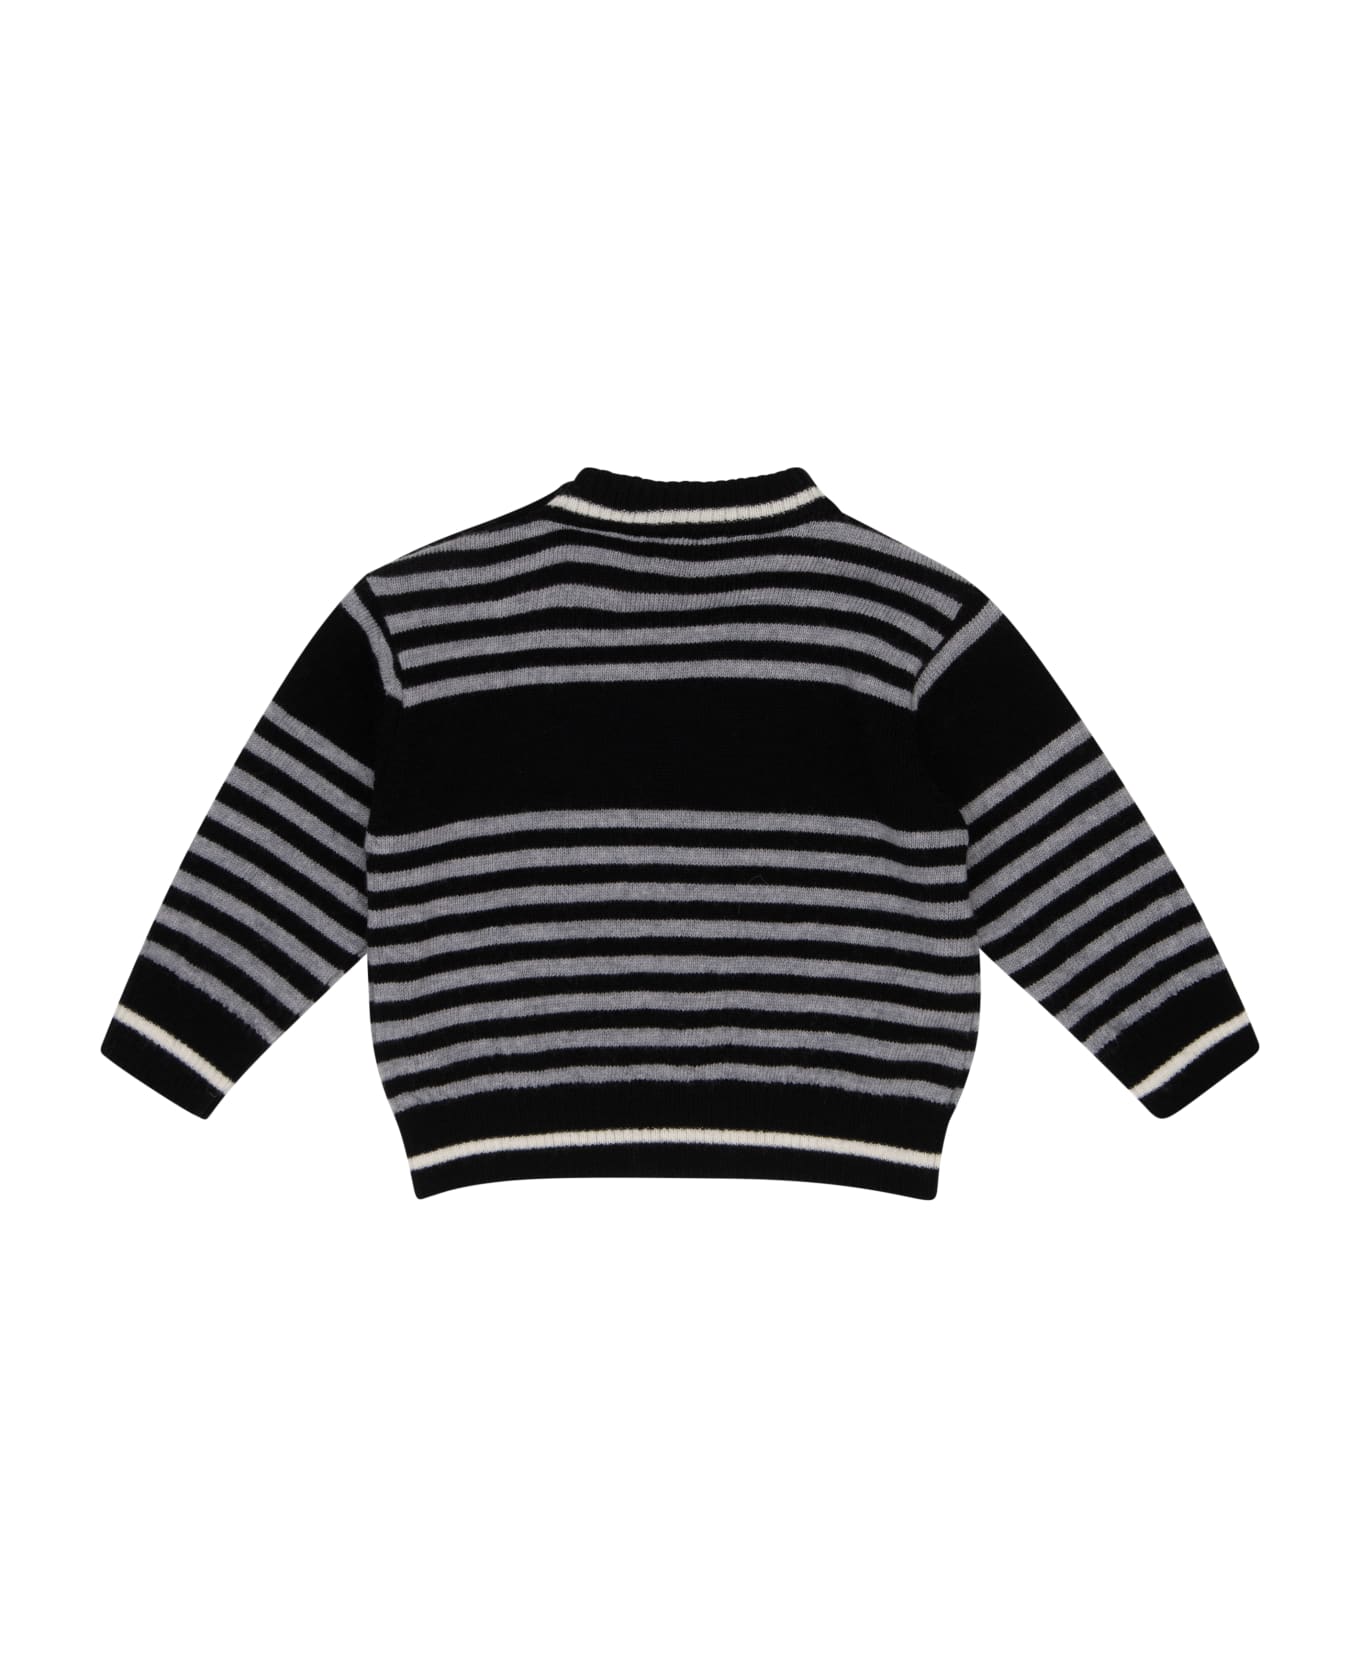 Balmain Printed Sweater - Black/grey